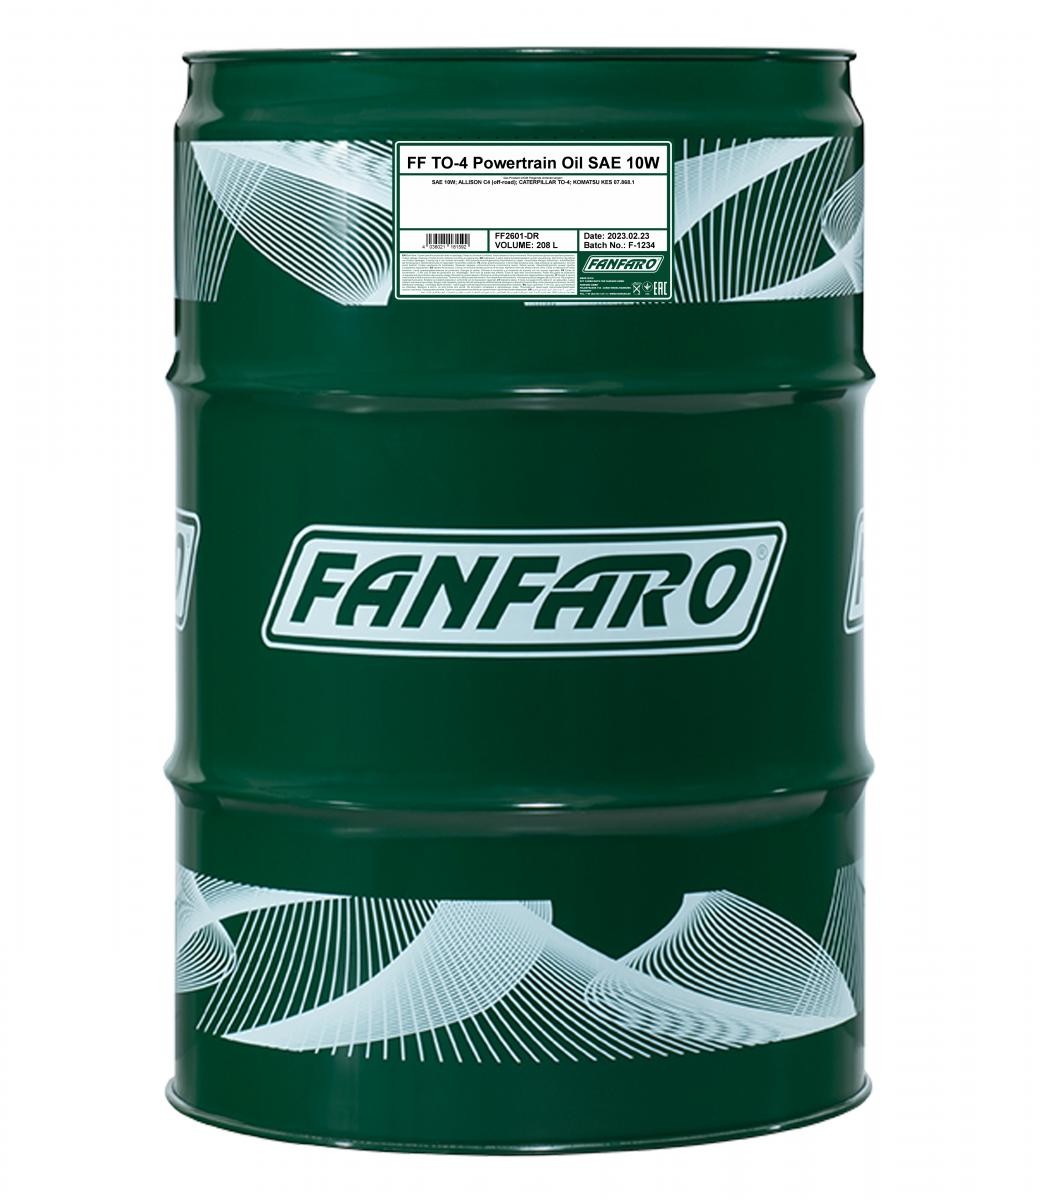 FANFARO TO-4 POWERTRAIN OIL 10W, Capacity: 208l CATERPILLAR TO-4, KOMATSU KES 07.868.1, ALLISON C4(off-road) Transmission oil FF2601-DR buy